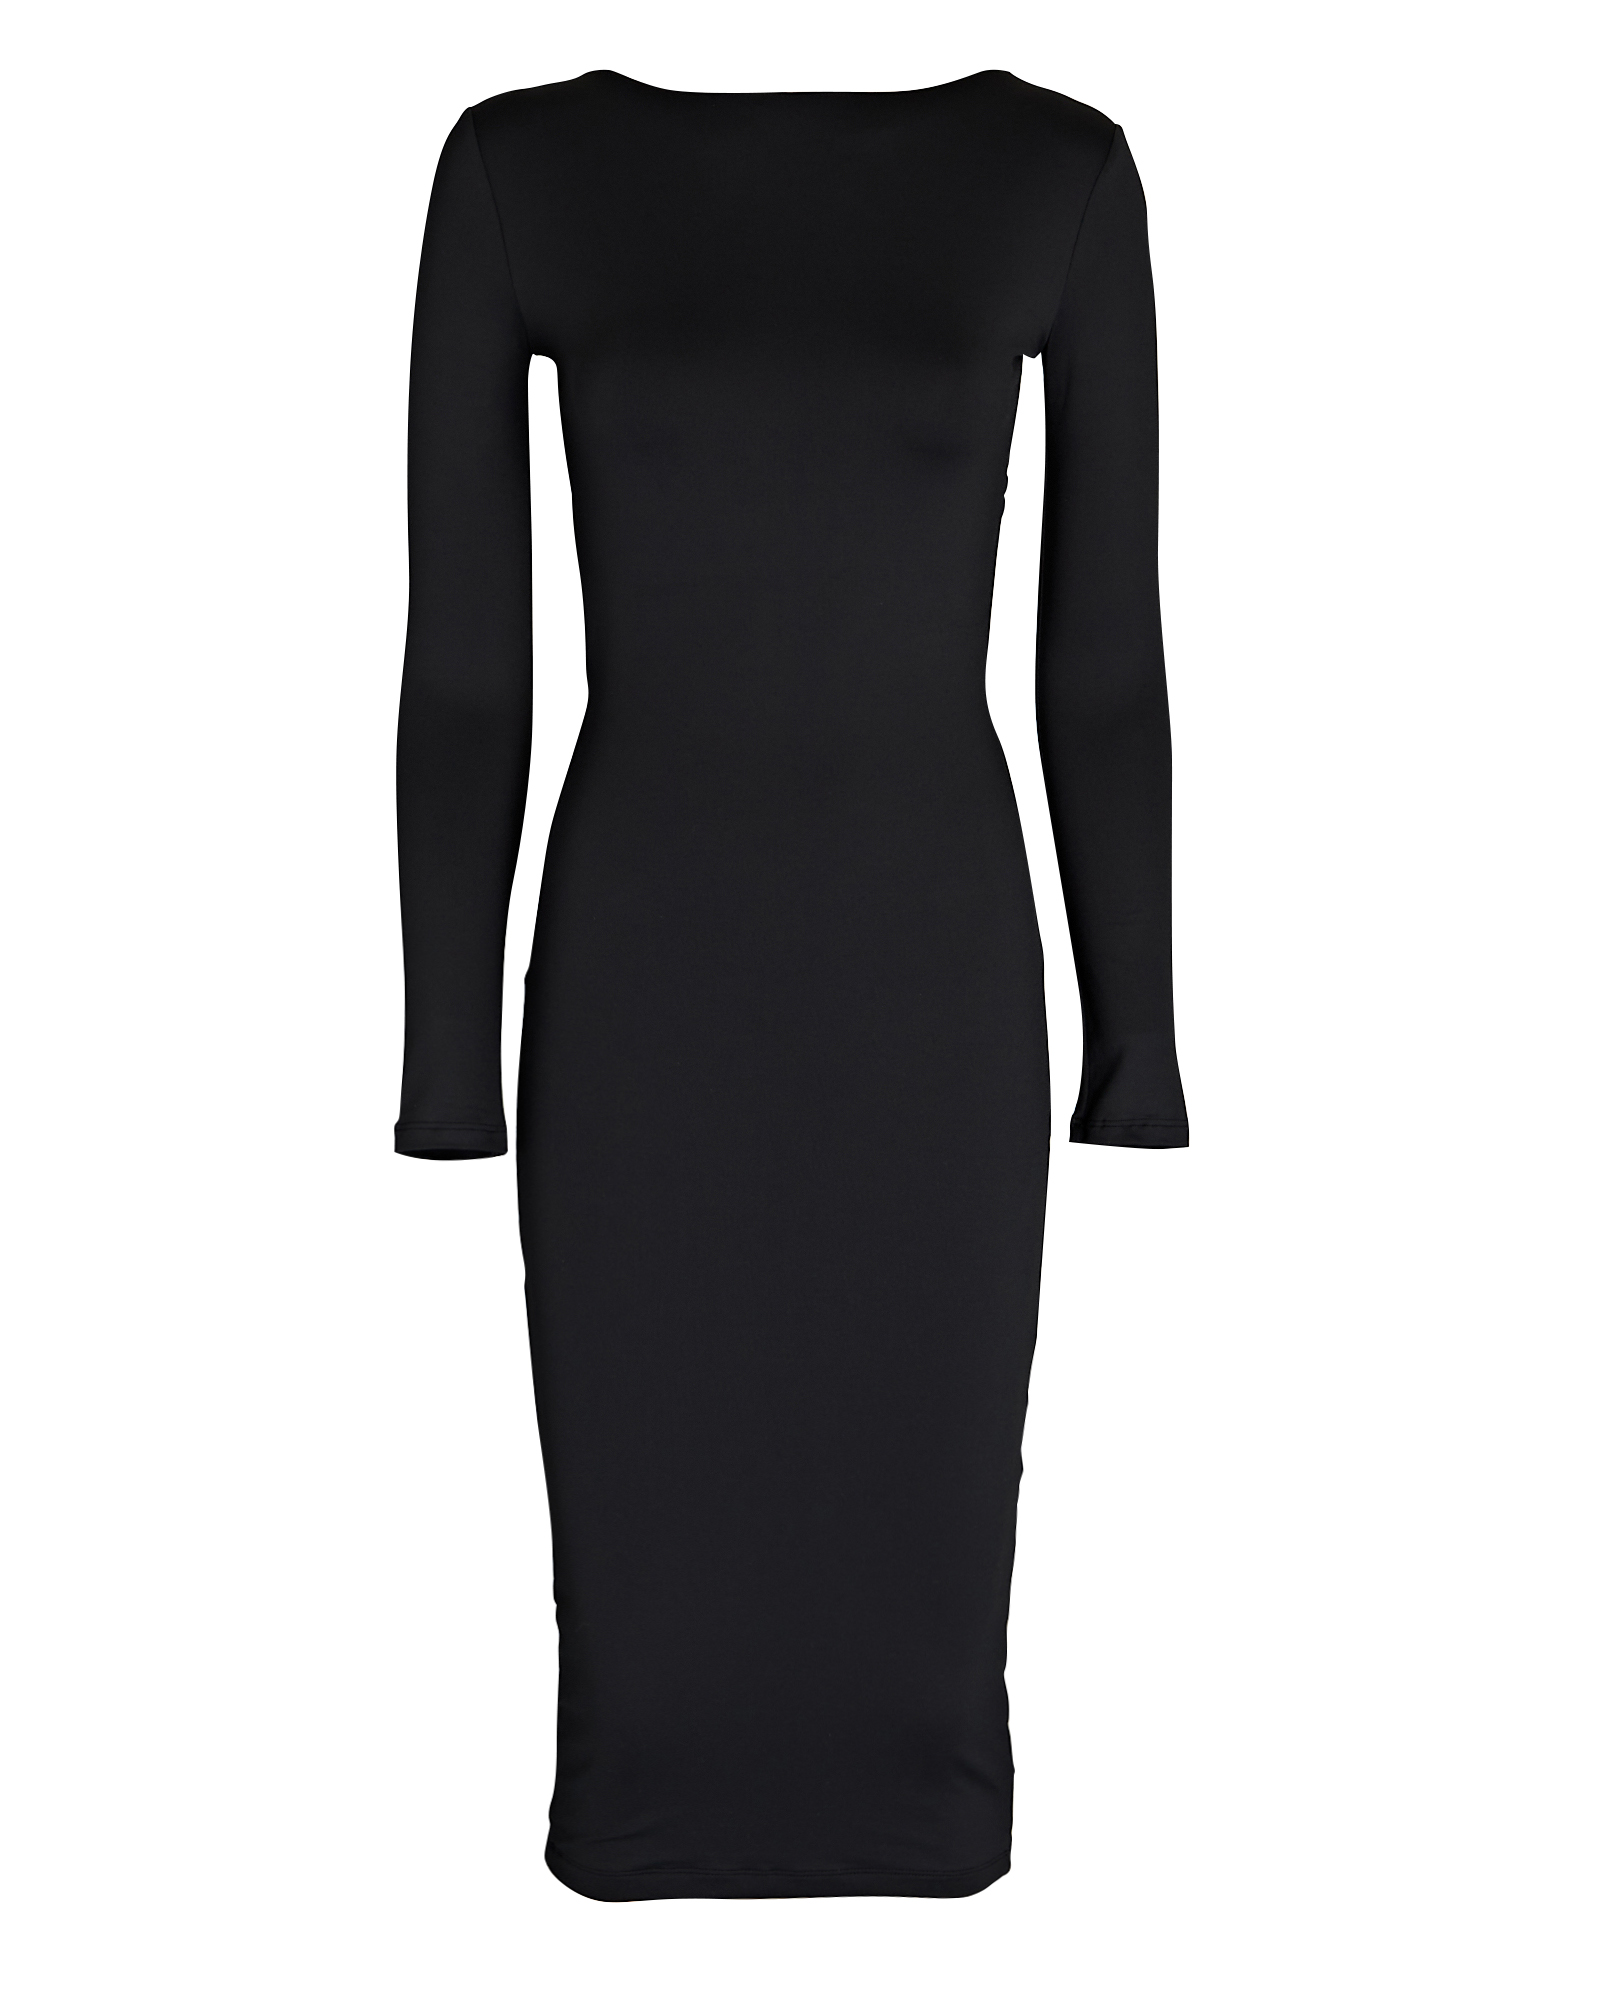 ALIX NYC Eden Cut-Out Midi Dress In Black | INTERMIX®